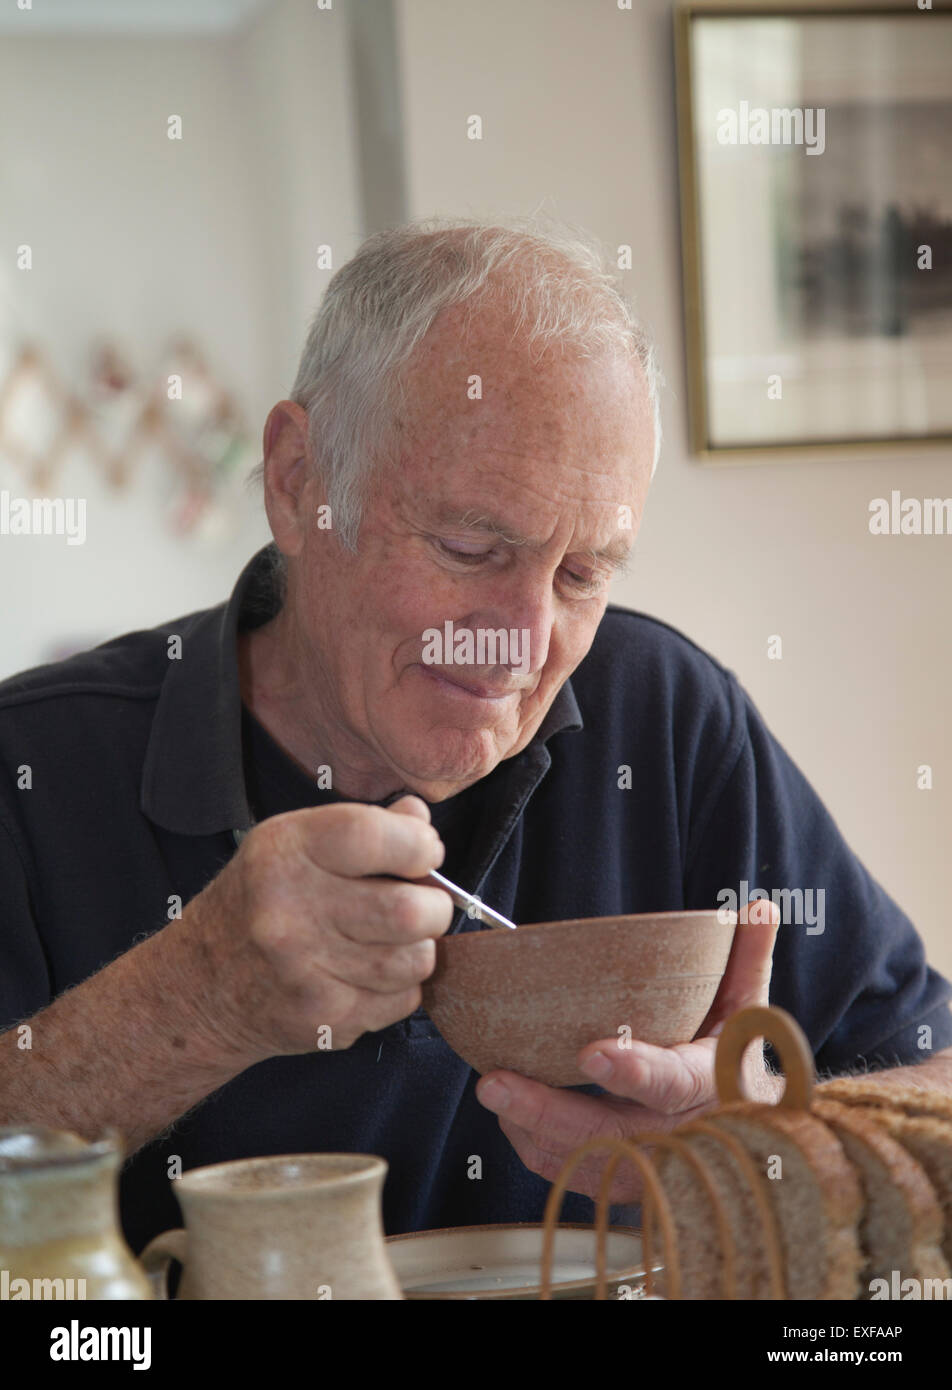 Senior man, sitting at table, eating bowl of cereal Stock Photo